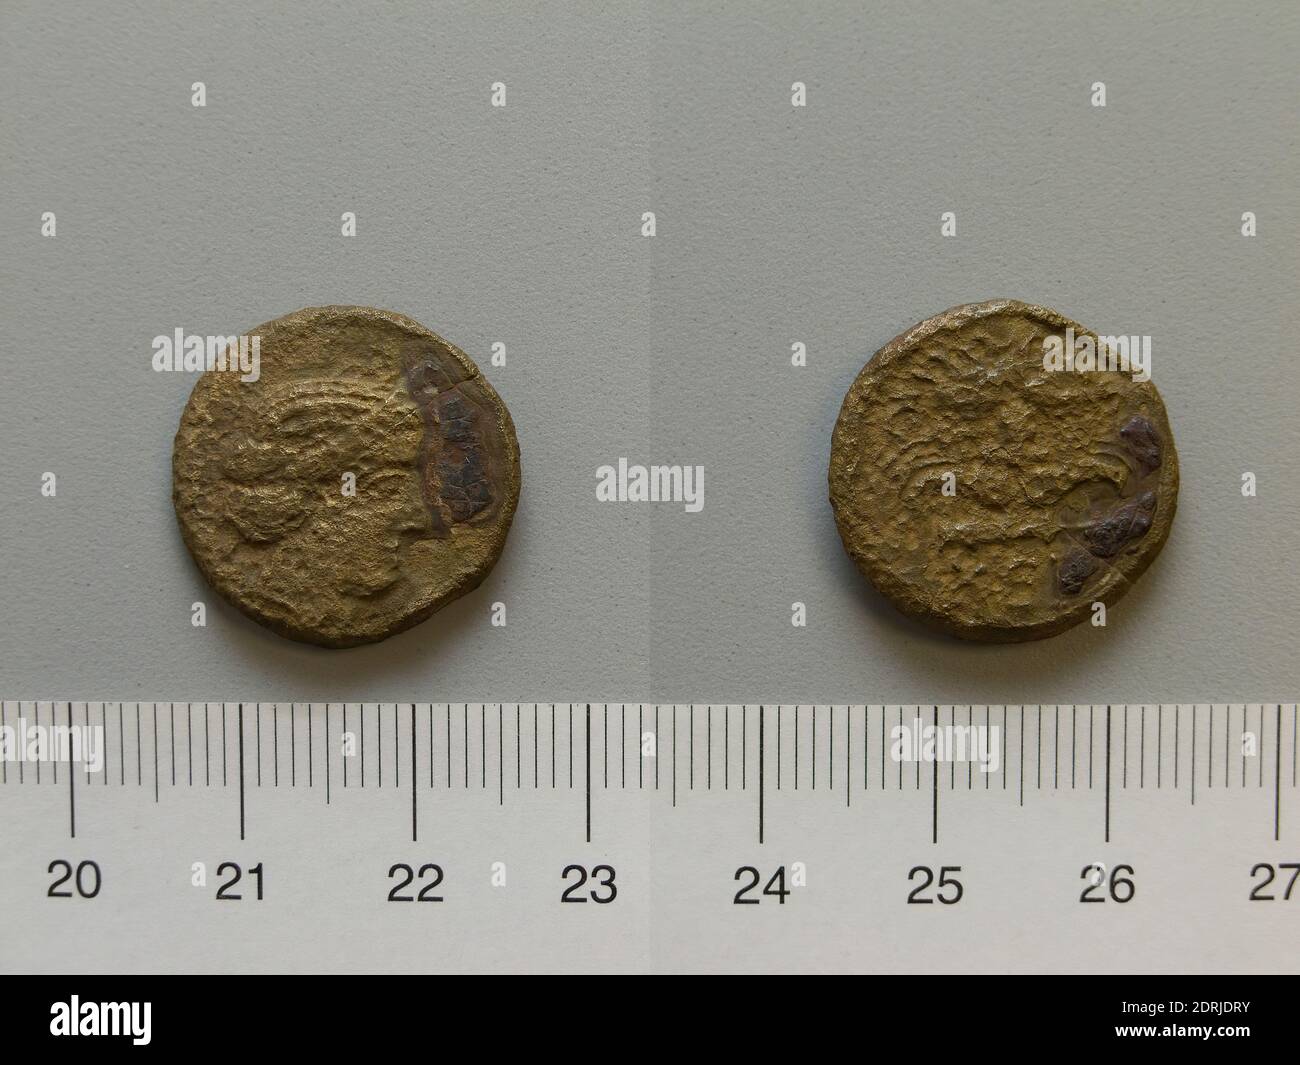 Mint: Chersonesus, Coin from Chersonesus, 100–50 B.C., Copper, 6.29 g, 20.1 mm, Made in Chersonesus, Thrace, Greek, Numismatics Stock Photo